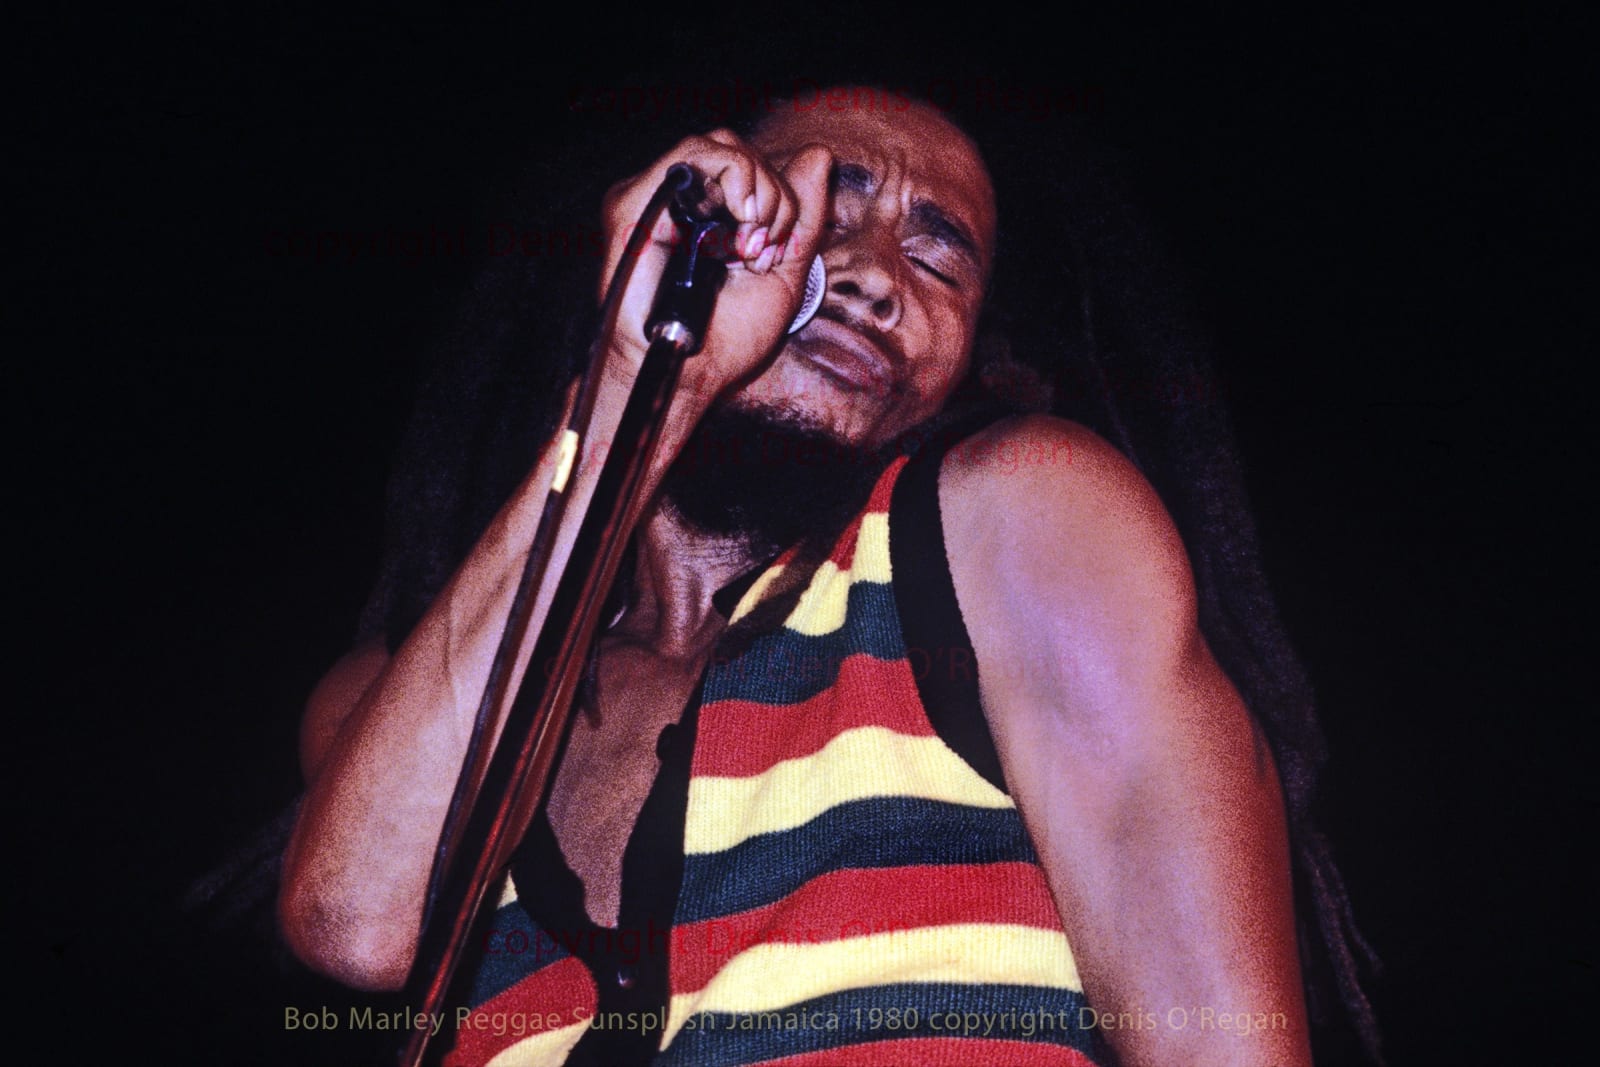 BOB MARLEY, Bob Marley Reggae Sunsplash, 1979 | Denis O'Regan 